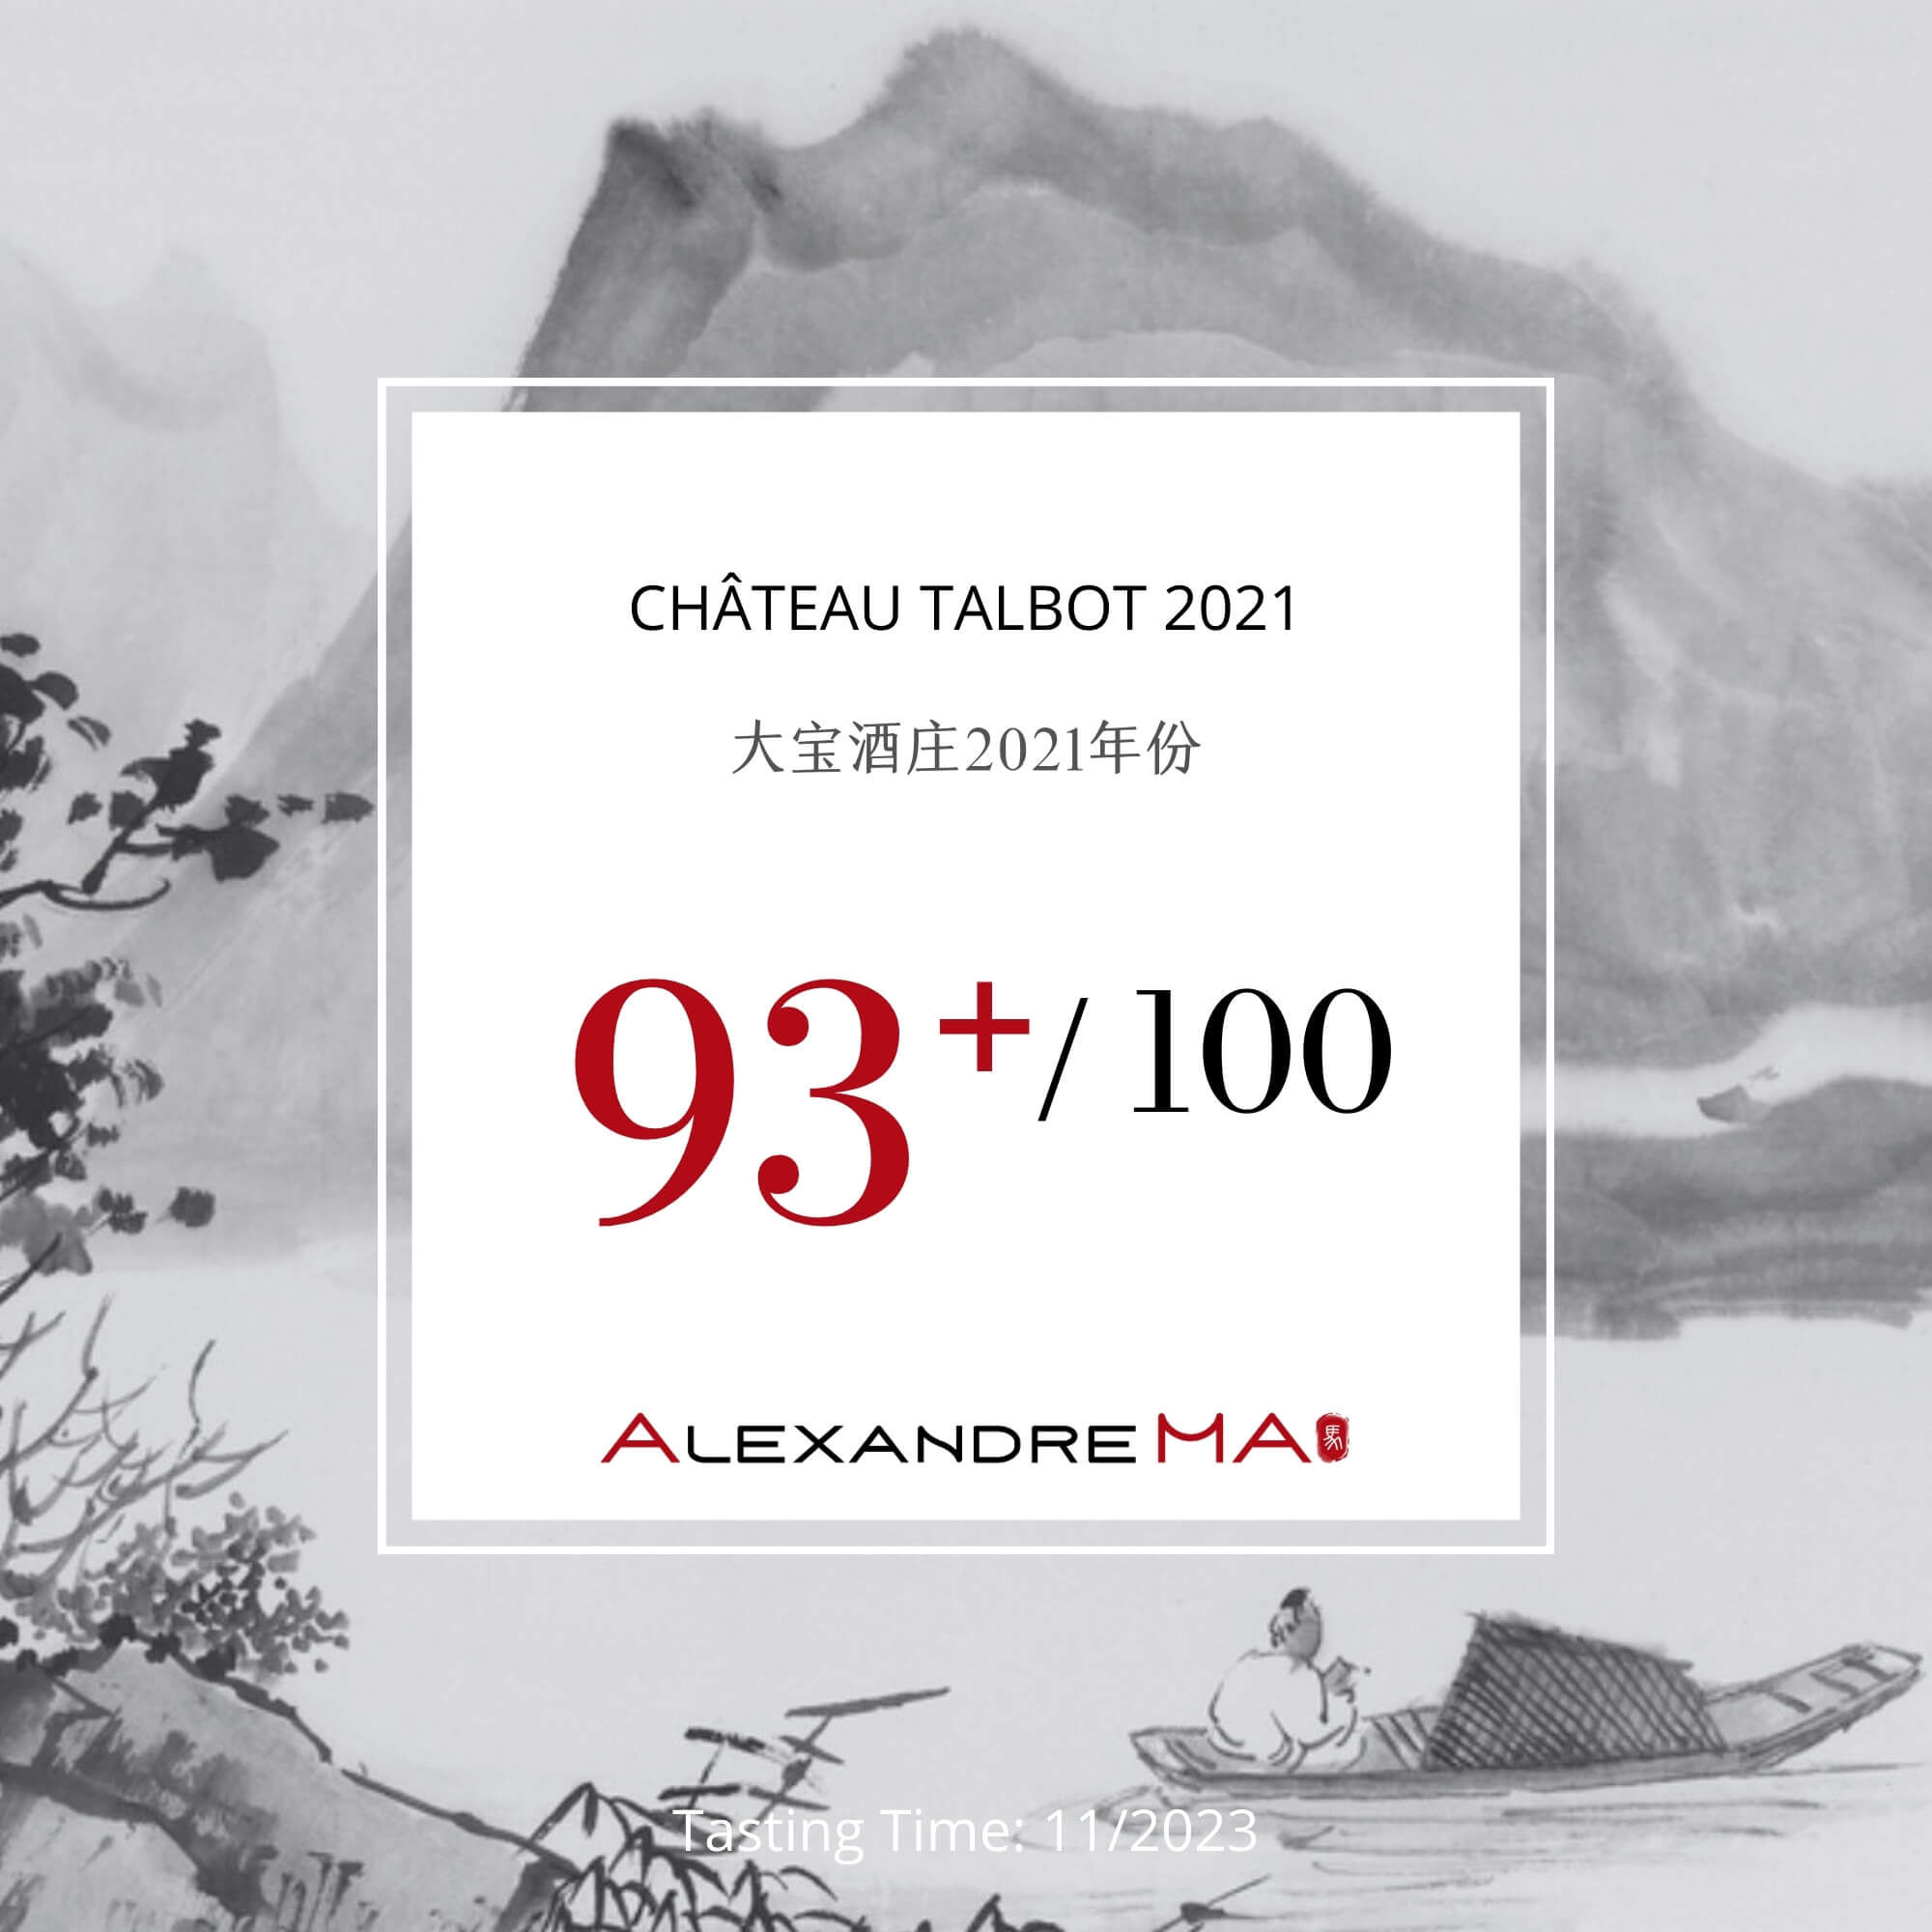 Château Talbot 2021 - Alexandre MA